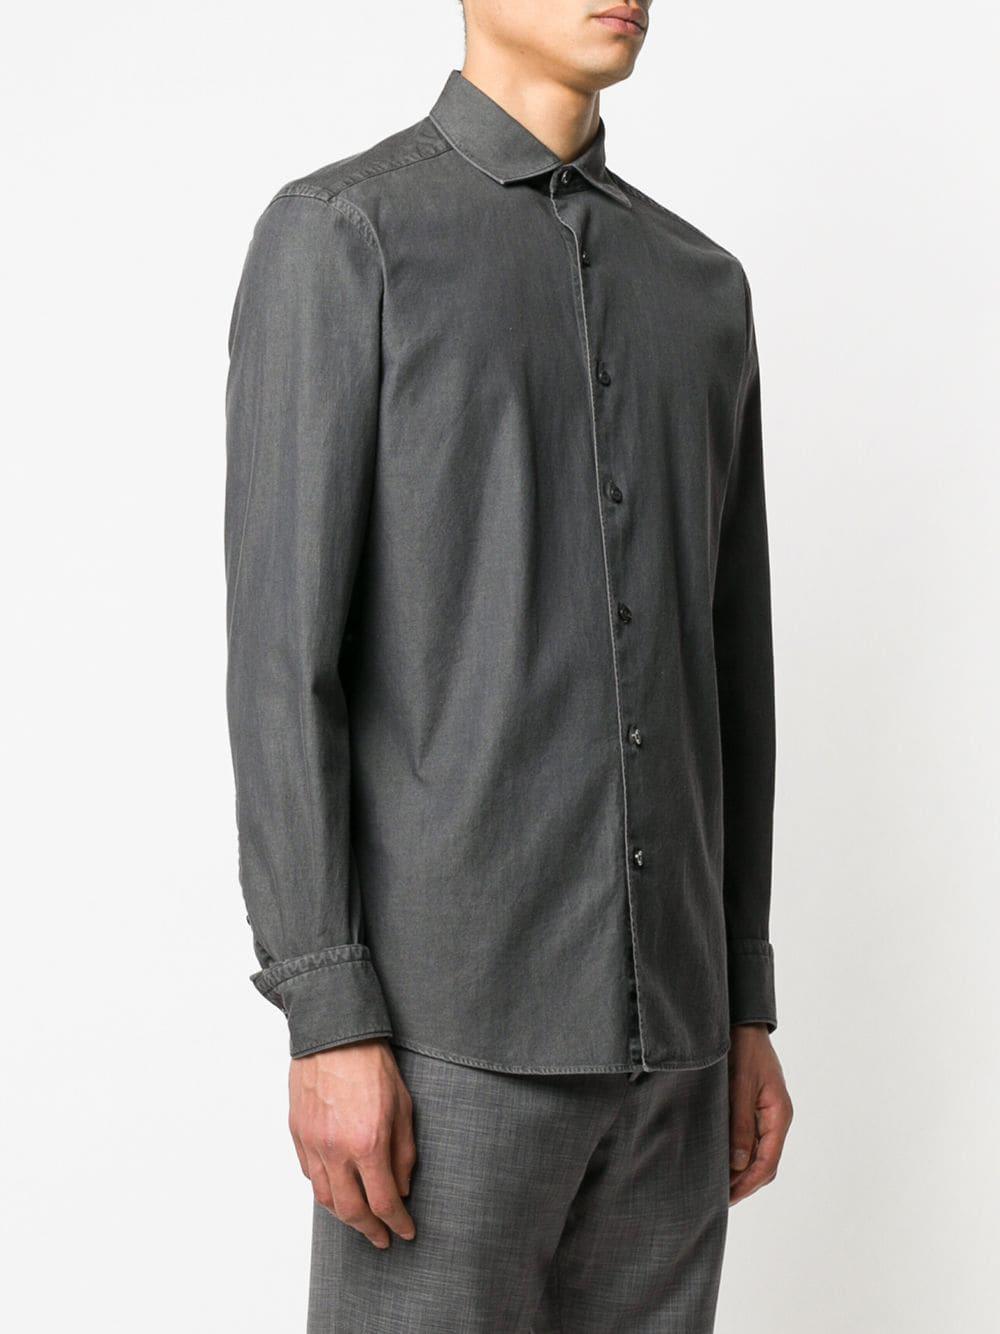 Ermenegildo Zegna Denim Shirt in Grey (Gray) for Men - Lyst